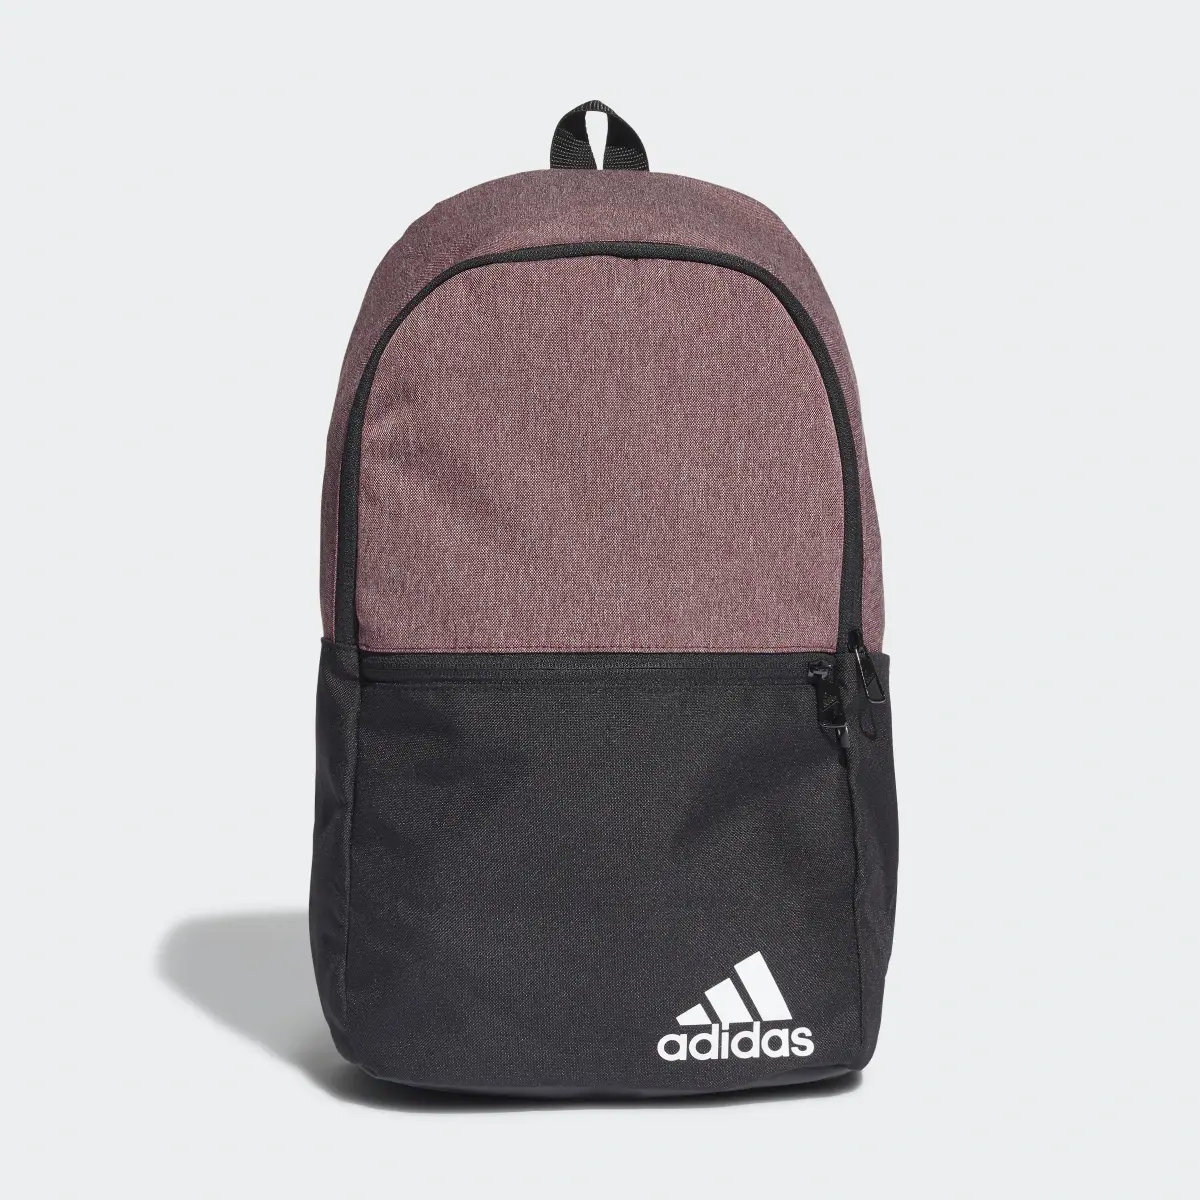 Adidas Daily II Backpack. 2